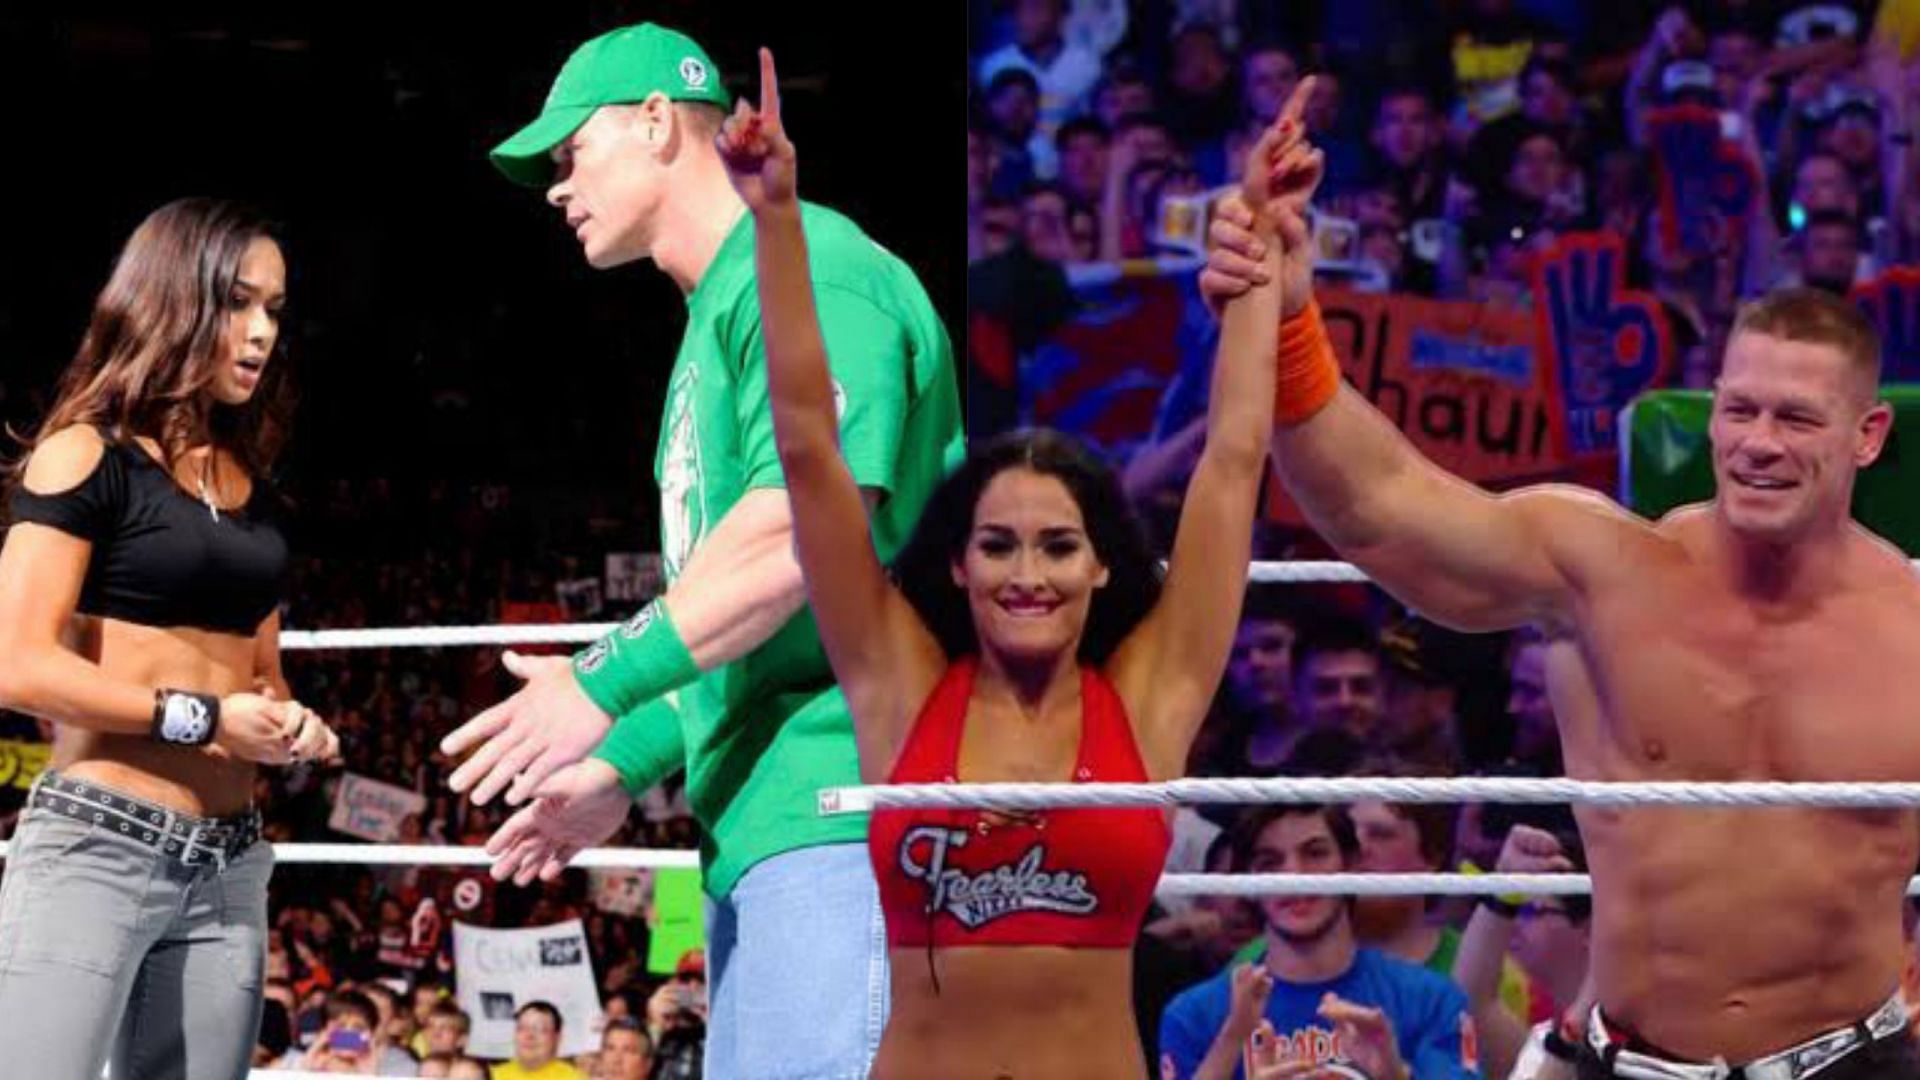 Cena with AJ Lee (L) &amp; with Nikka Bella (R).